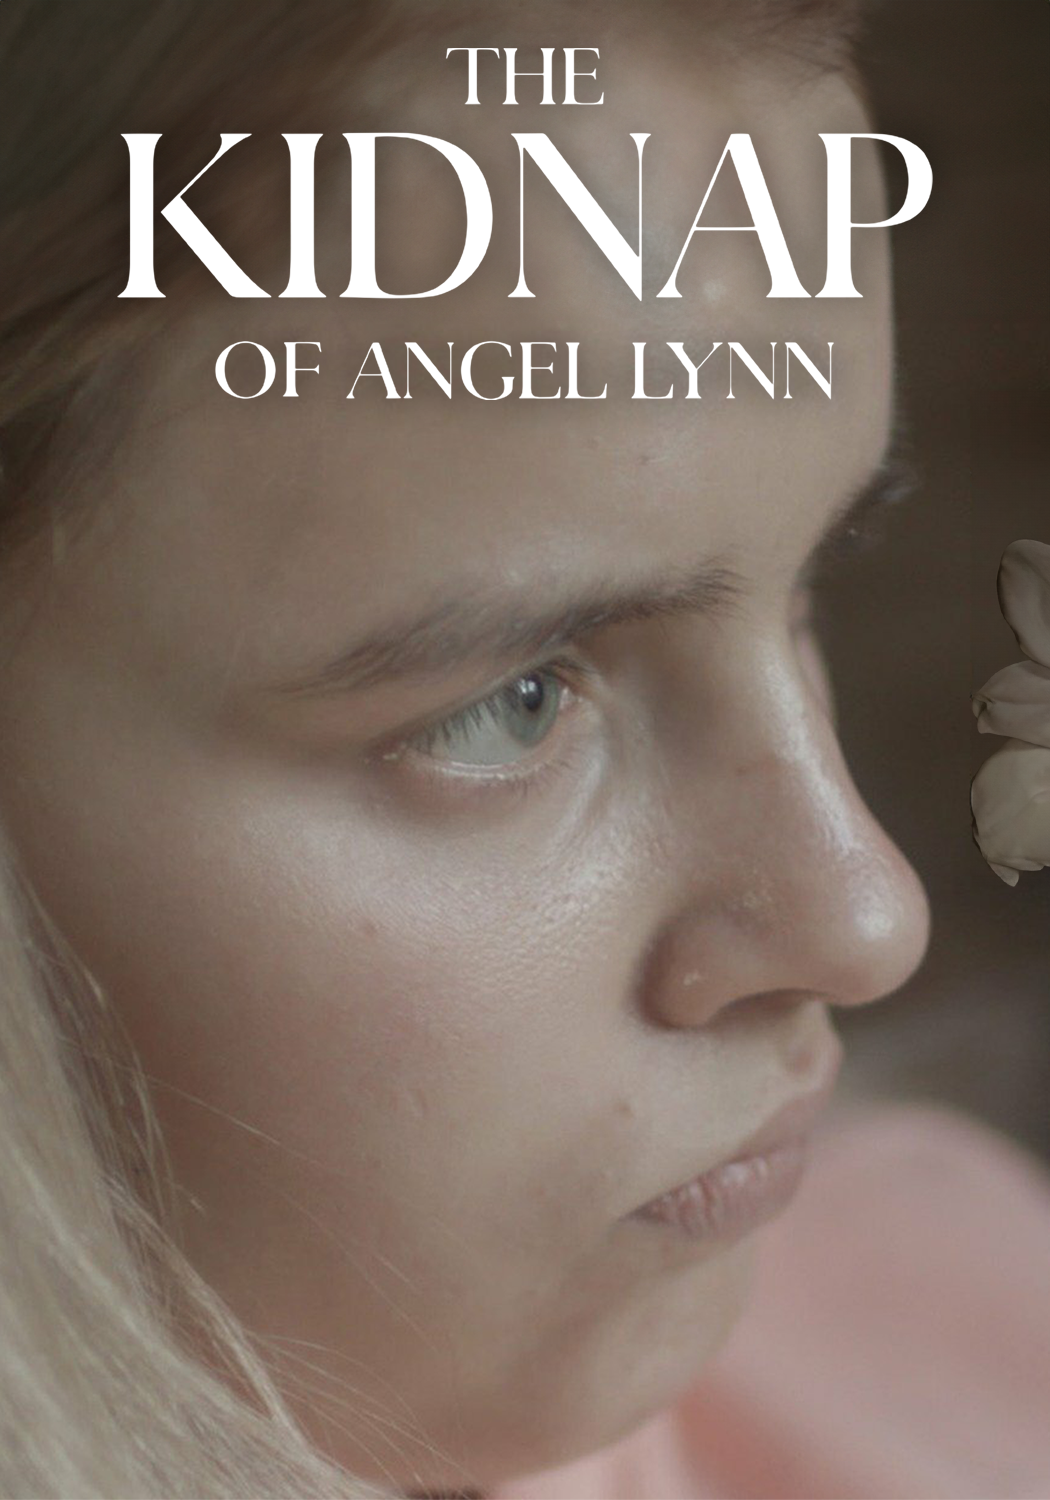 The Kidnap of Angel Lynn